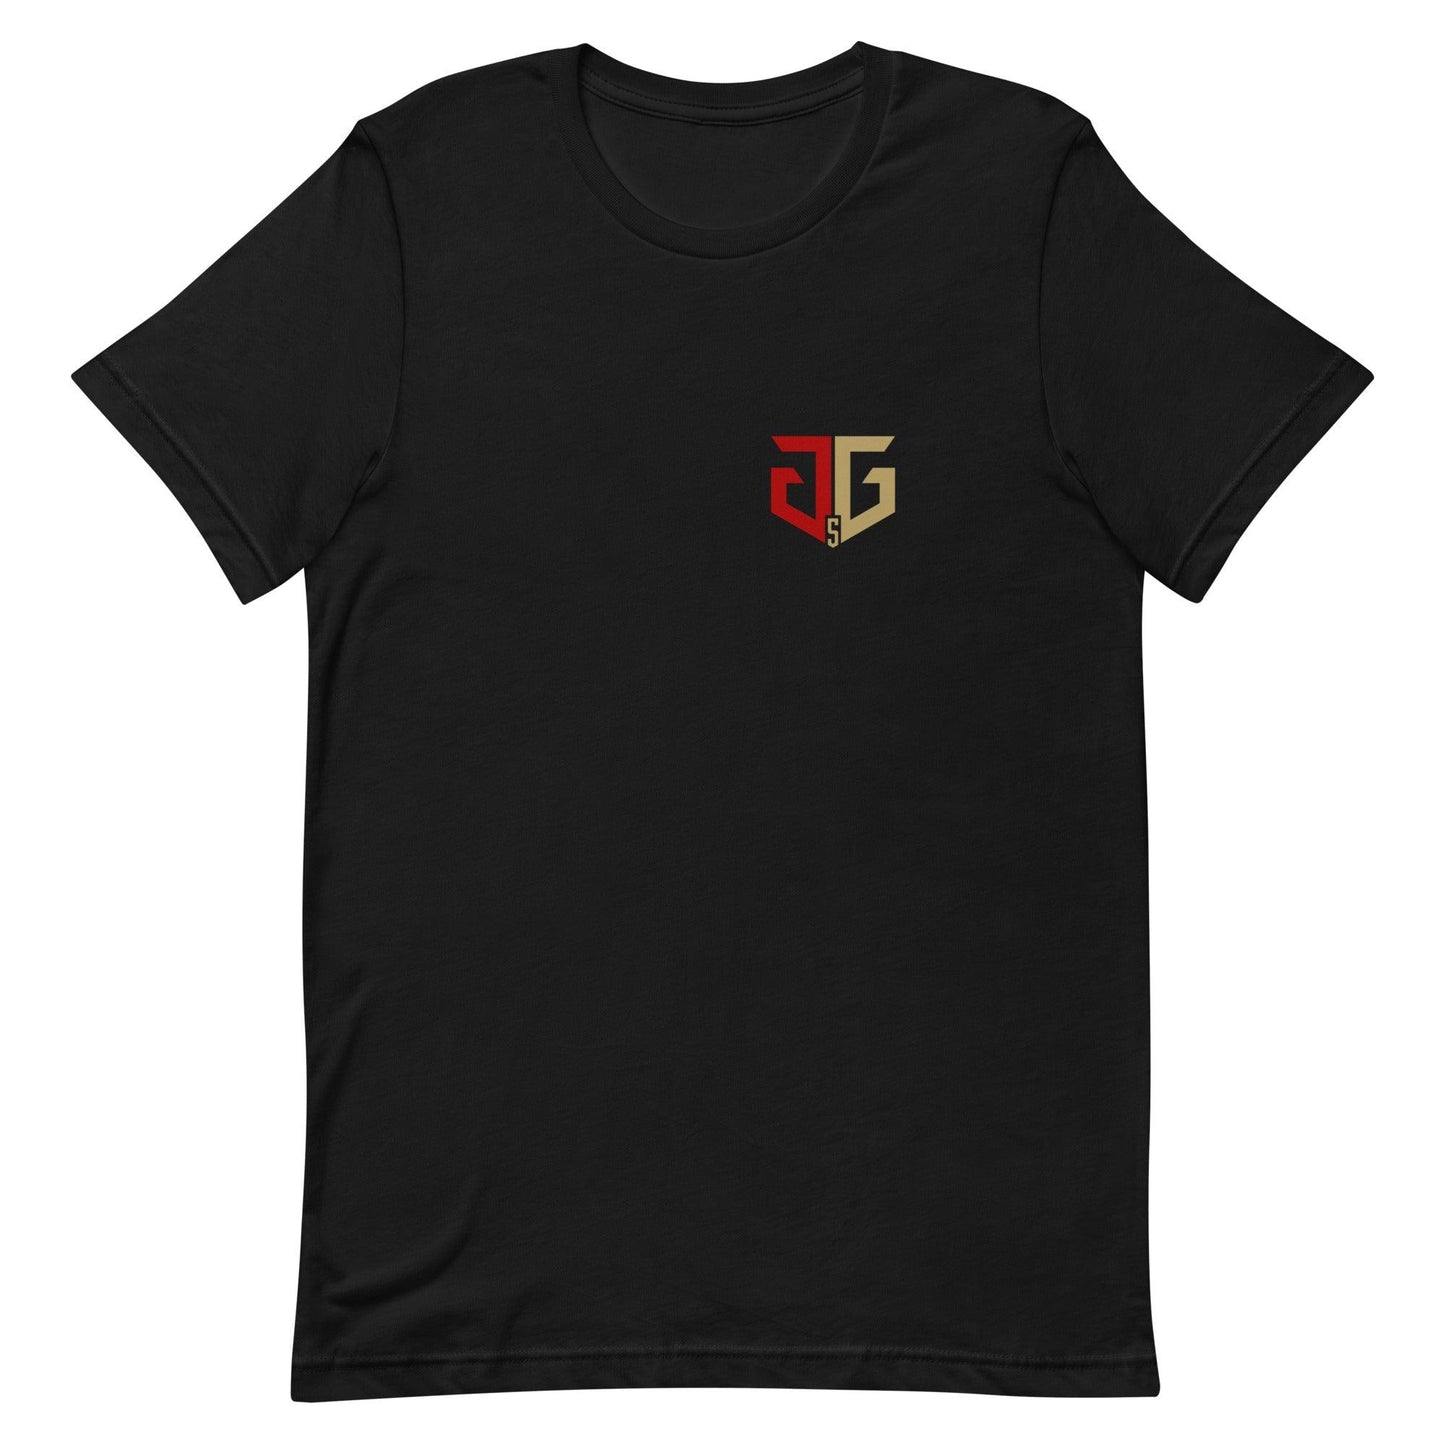 Jeff Garcia "Signature" t-shirt - Fan Arch